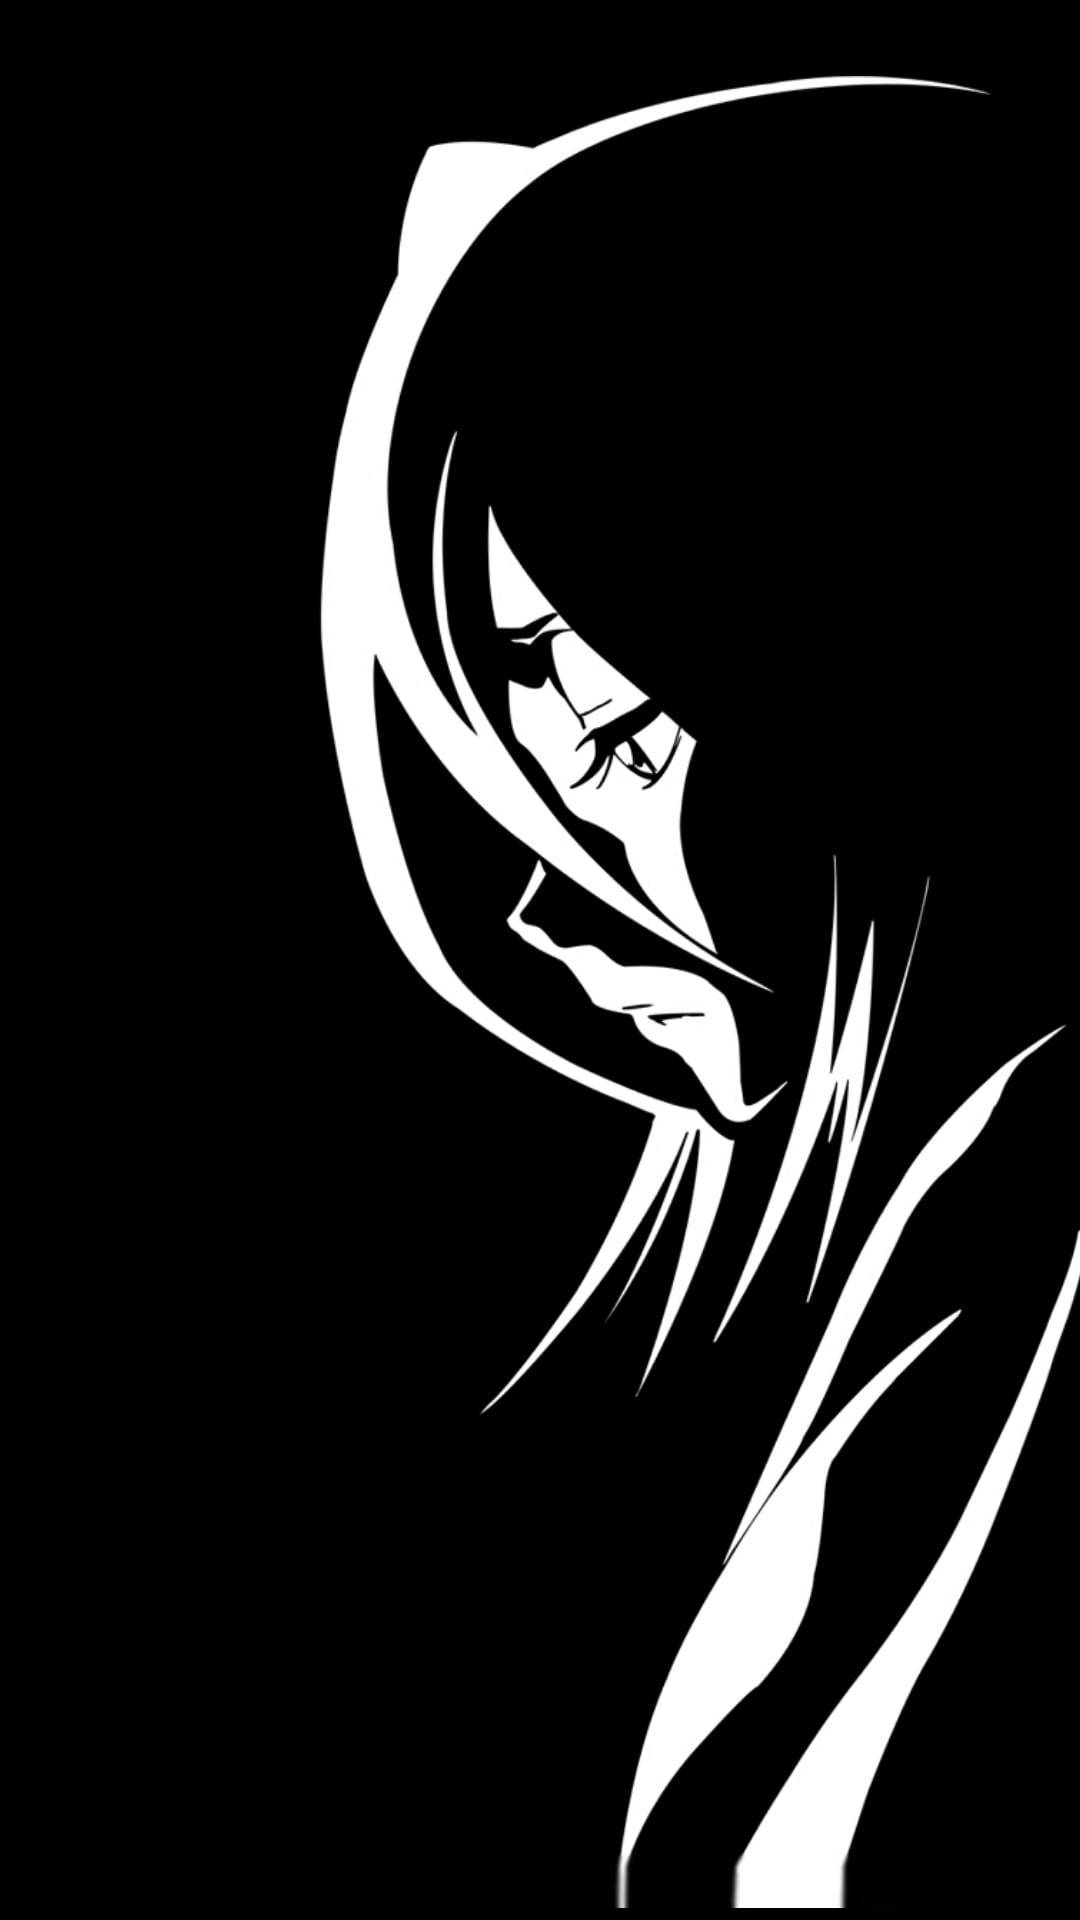 Download Aesthetic Sad Anime Girl Black And White Wallpaper